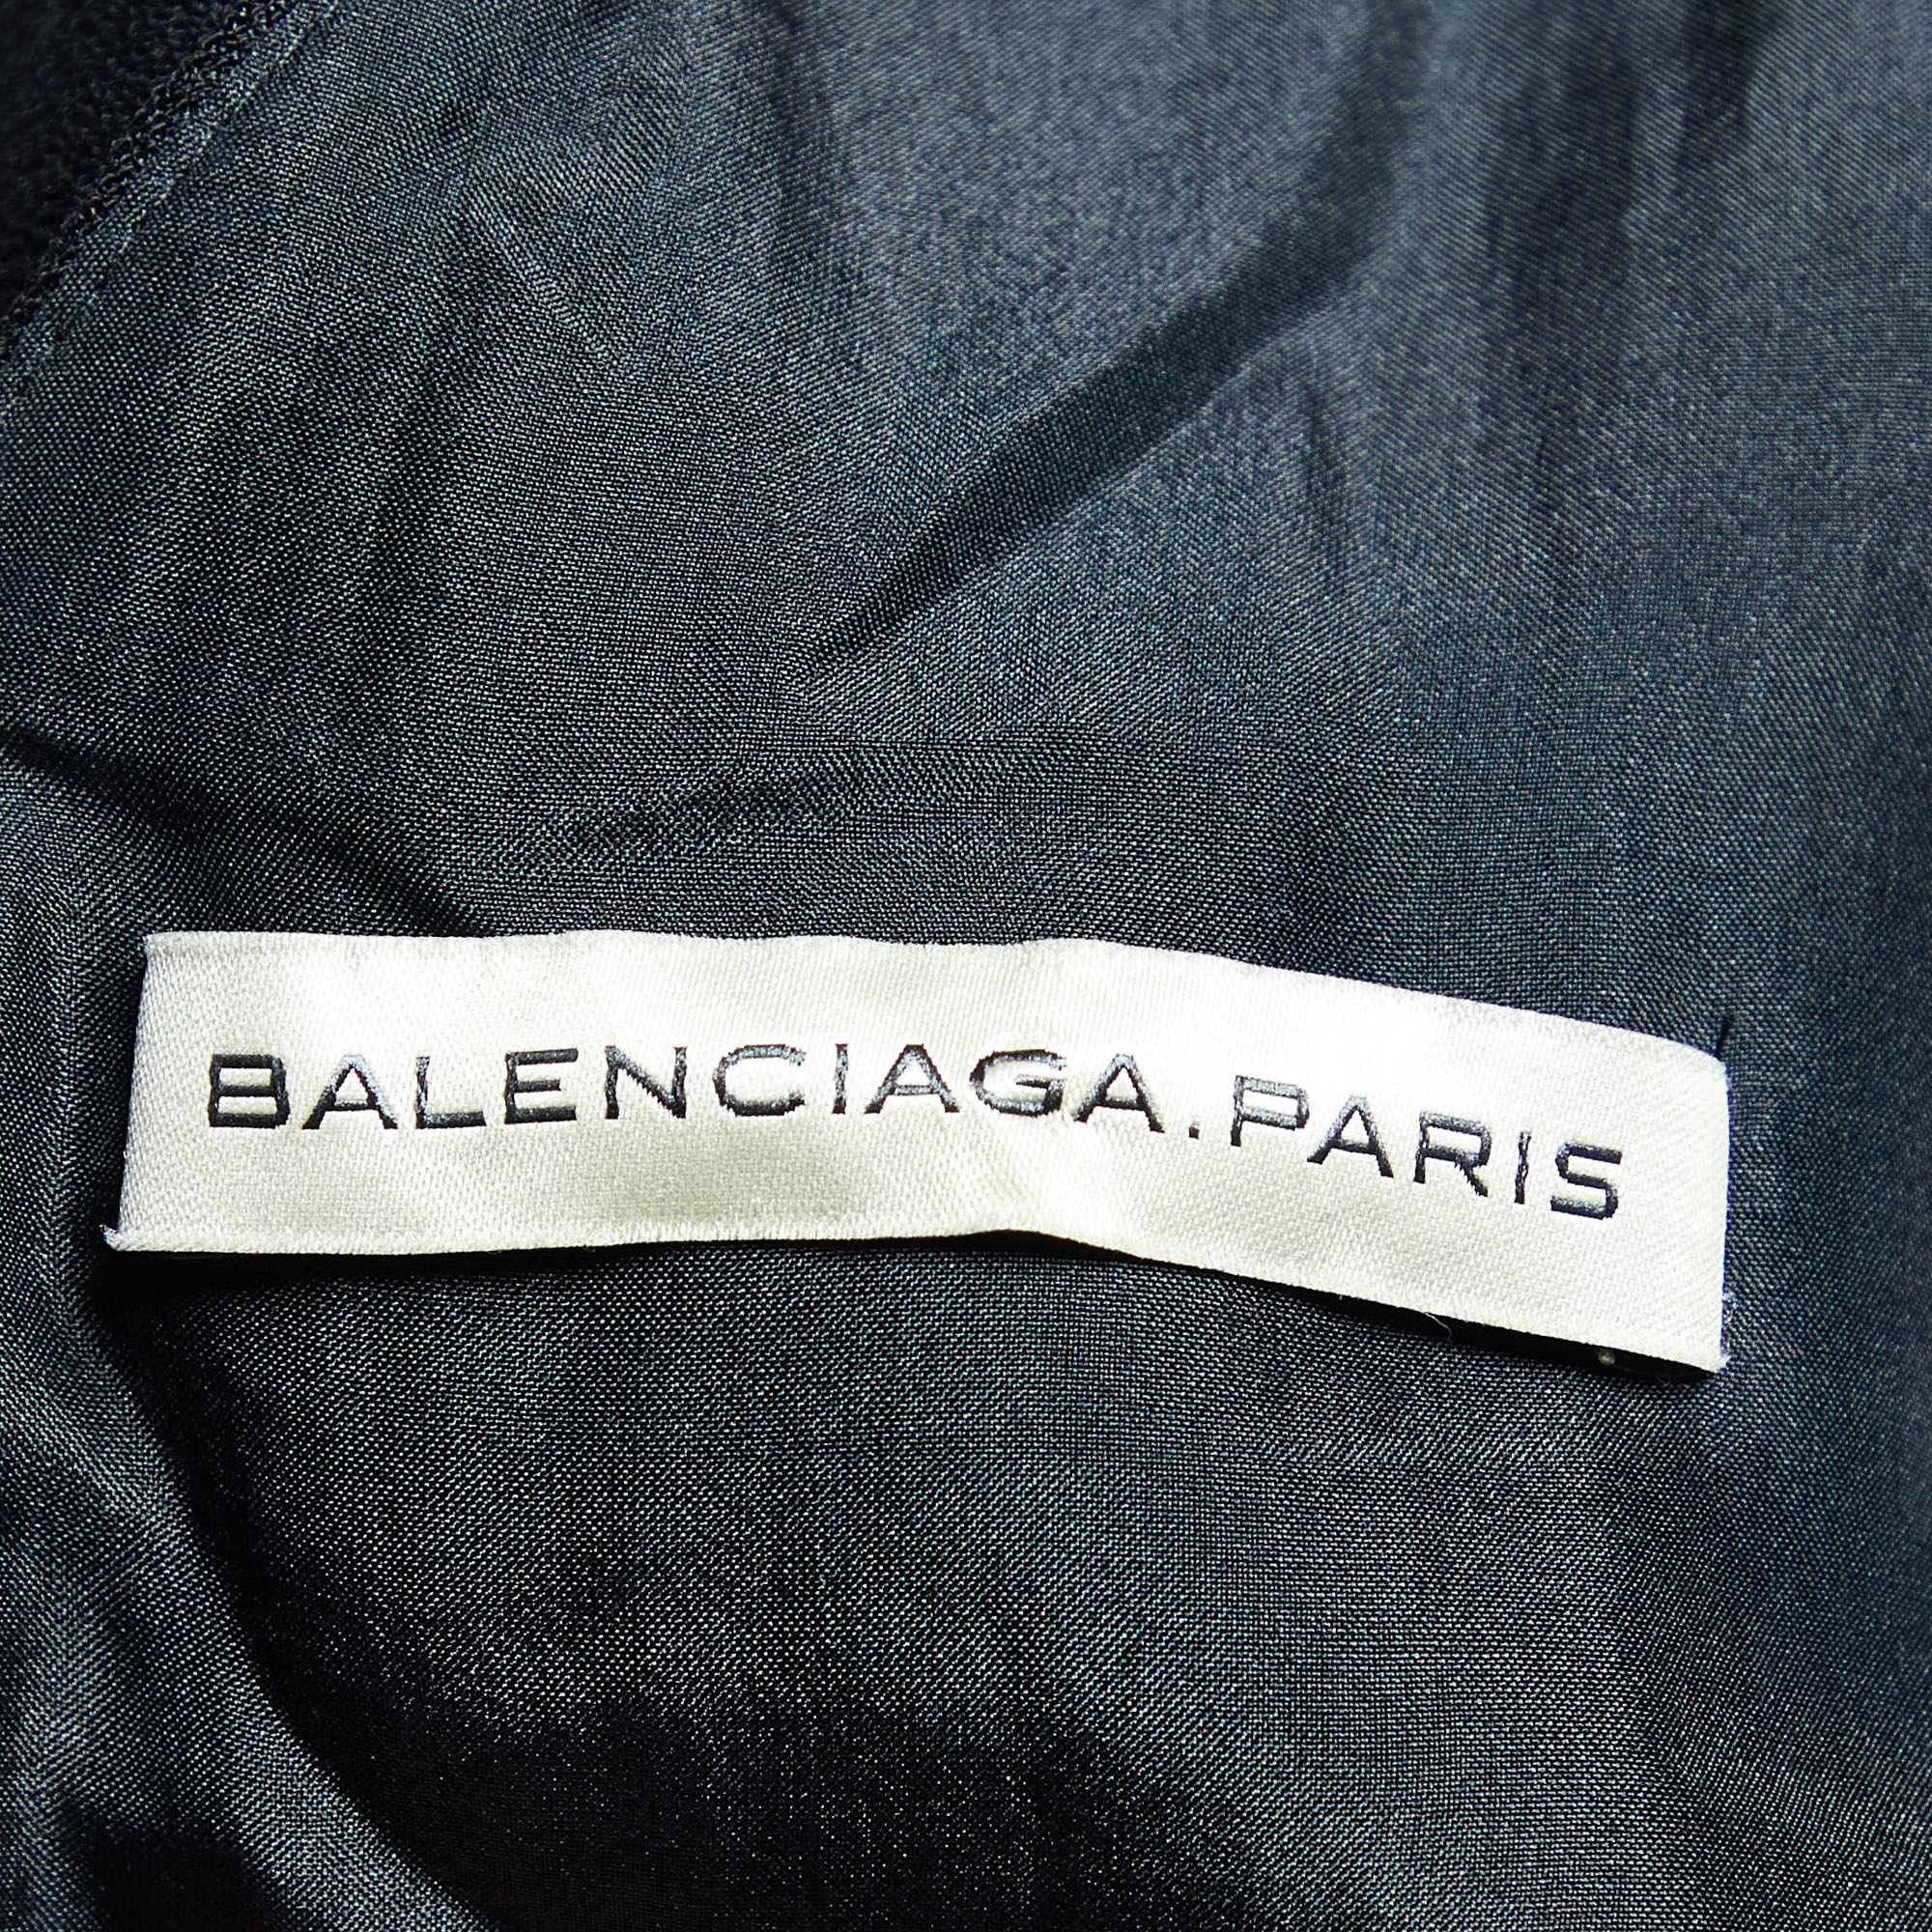 Balenciaga Black Crepe Sleeveless Draped Maxi Dress M